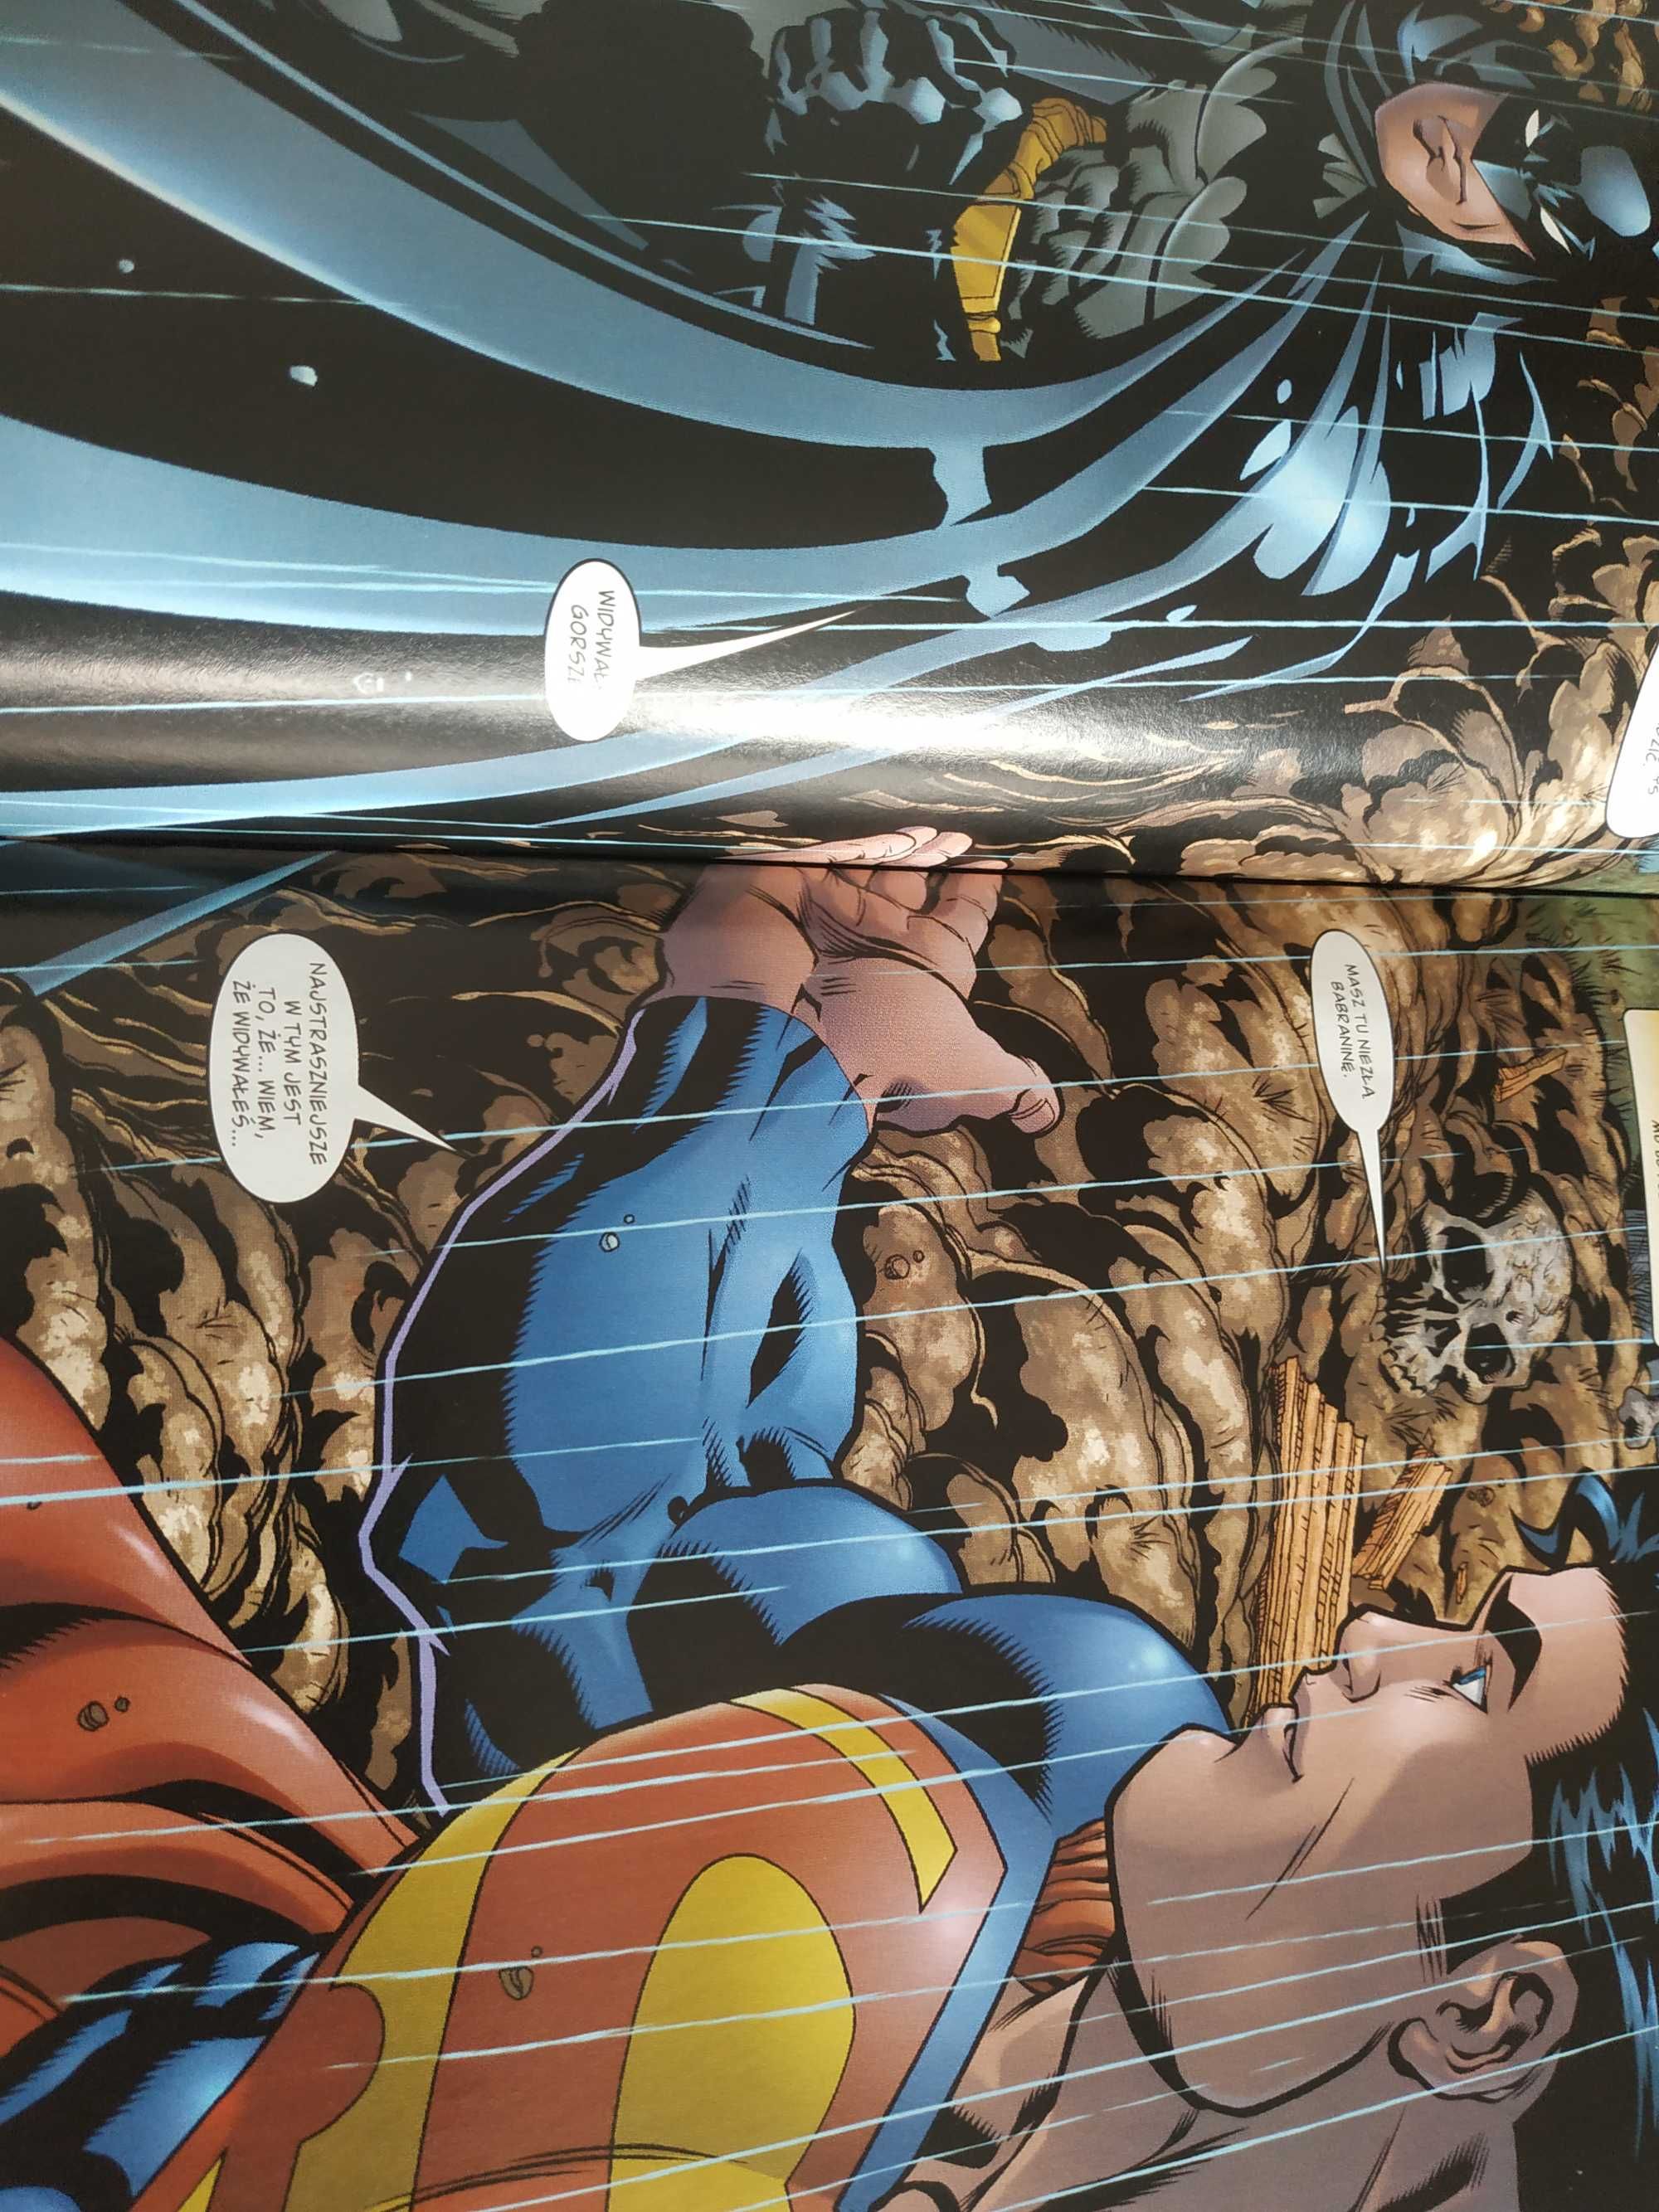 Superman, Batman 1-2/3, Dobry Komiks